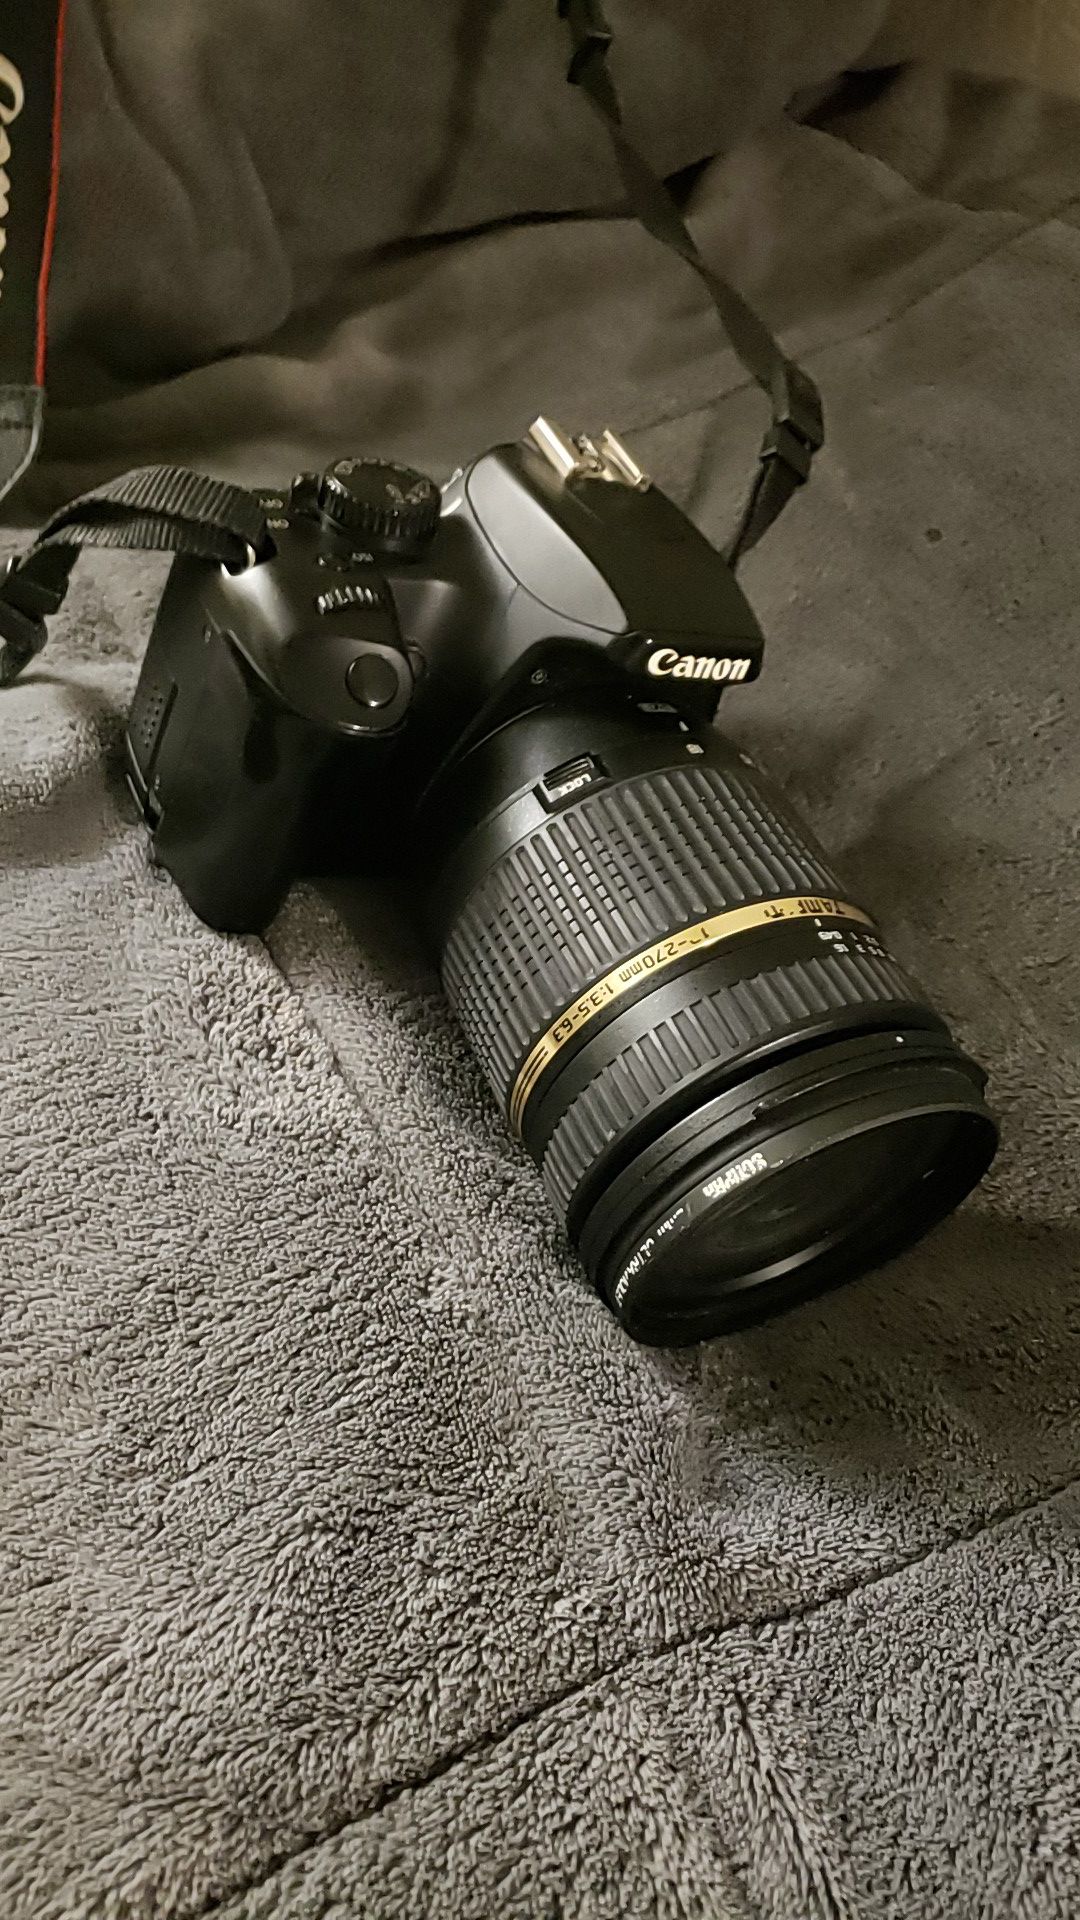 Canon EOS Rebel XS Digital SLR W/ Tamron LD B003 18-270mm lens